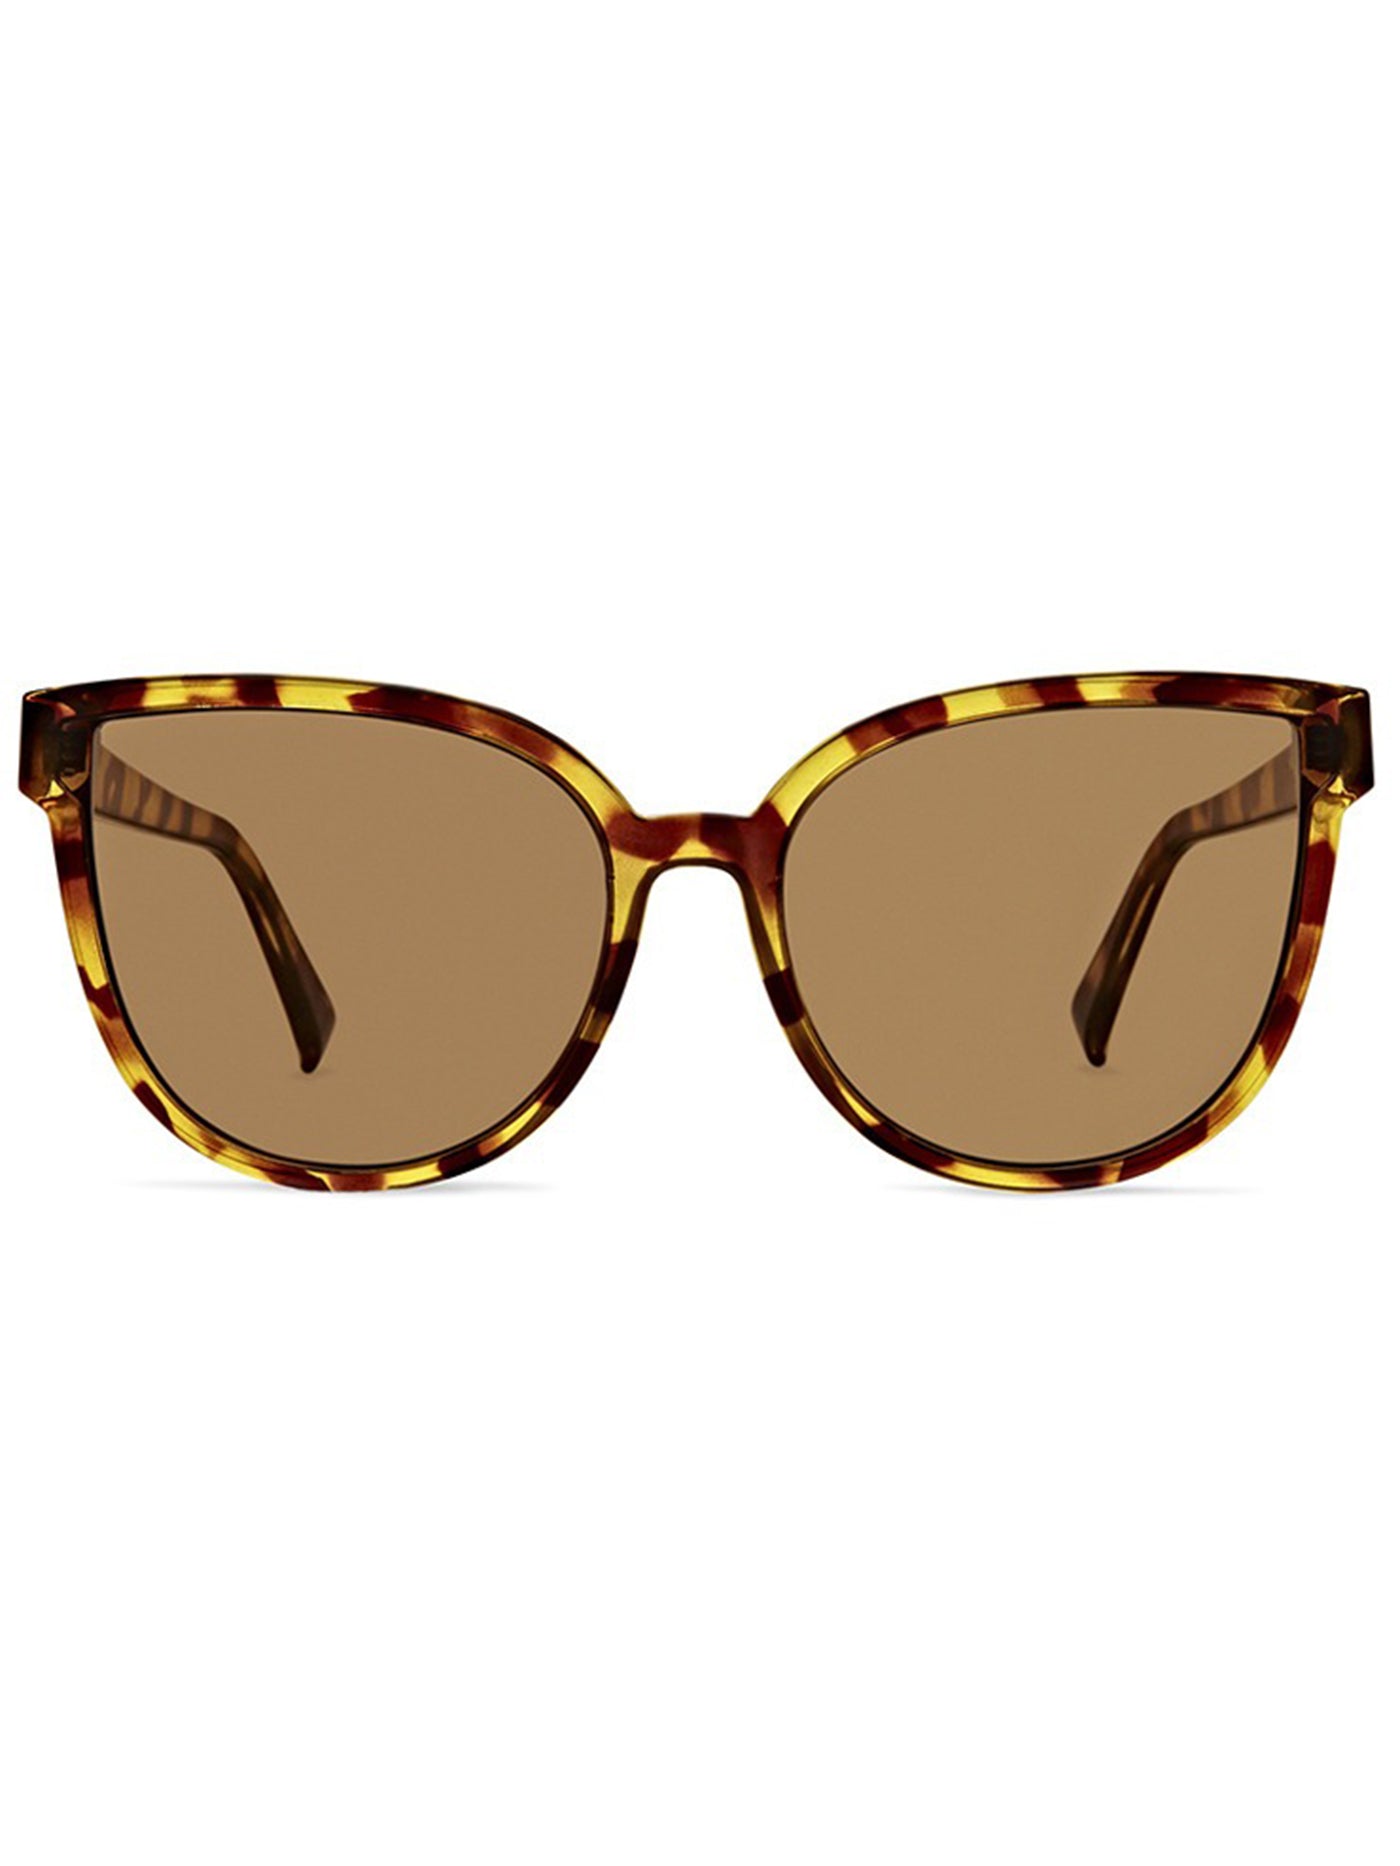 Von Zipper Fairchild Spotted Tort/Bronze Sunglasses